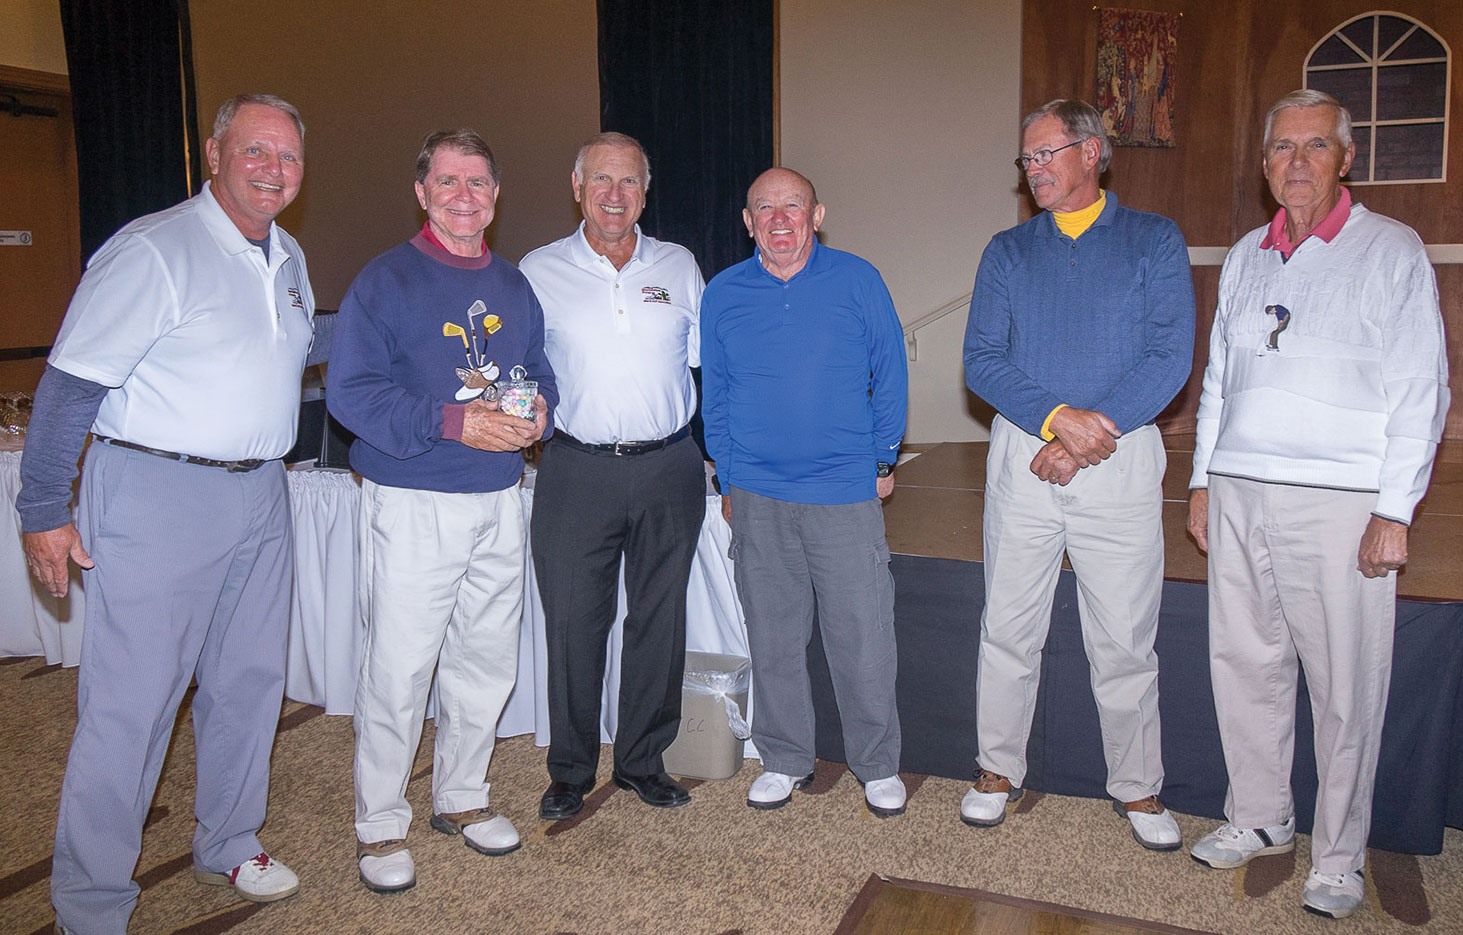 Left to right: Bob Eder, Harry Clausen, Dennis Marchand, Tom Pryde, Chuck Kelsey and John Borchert